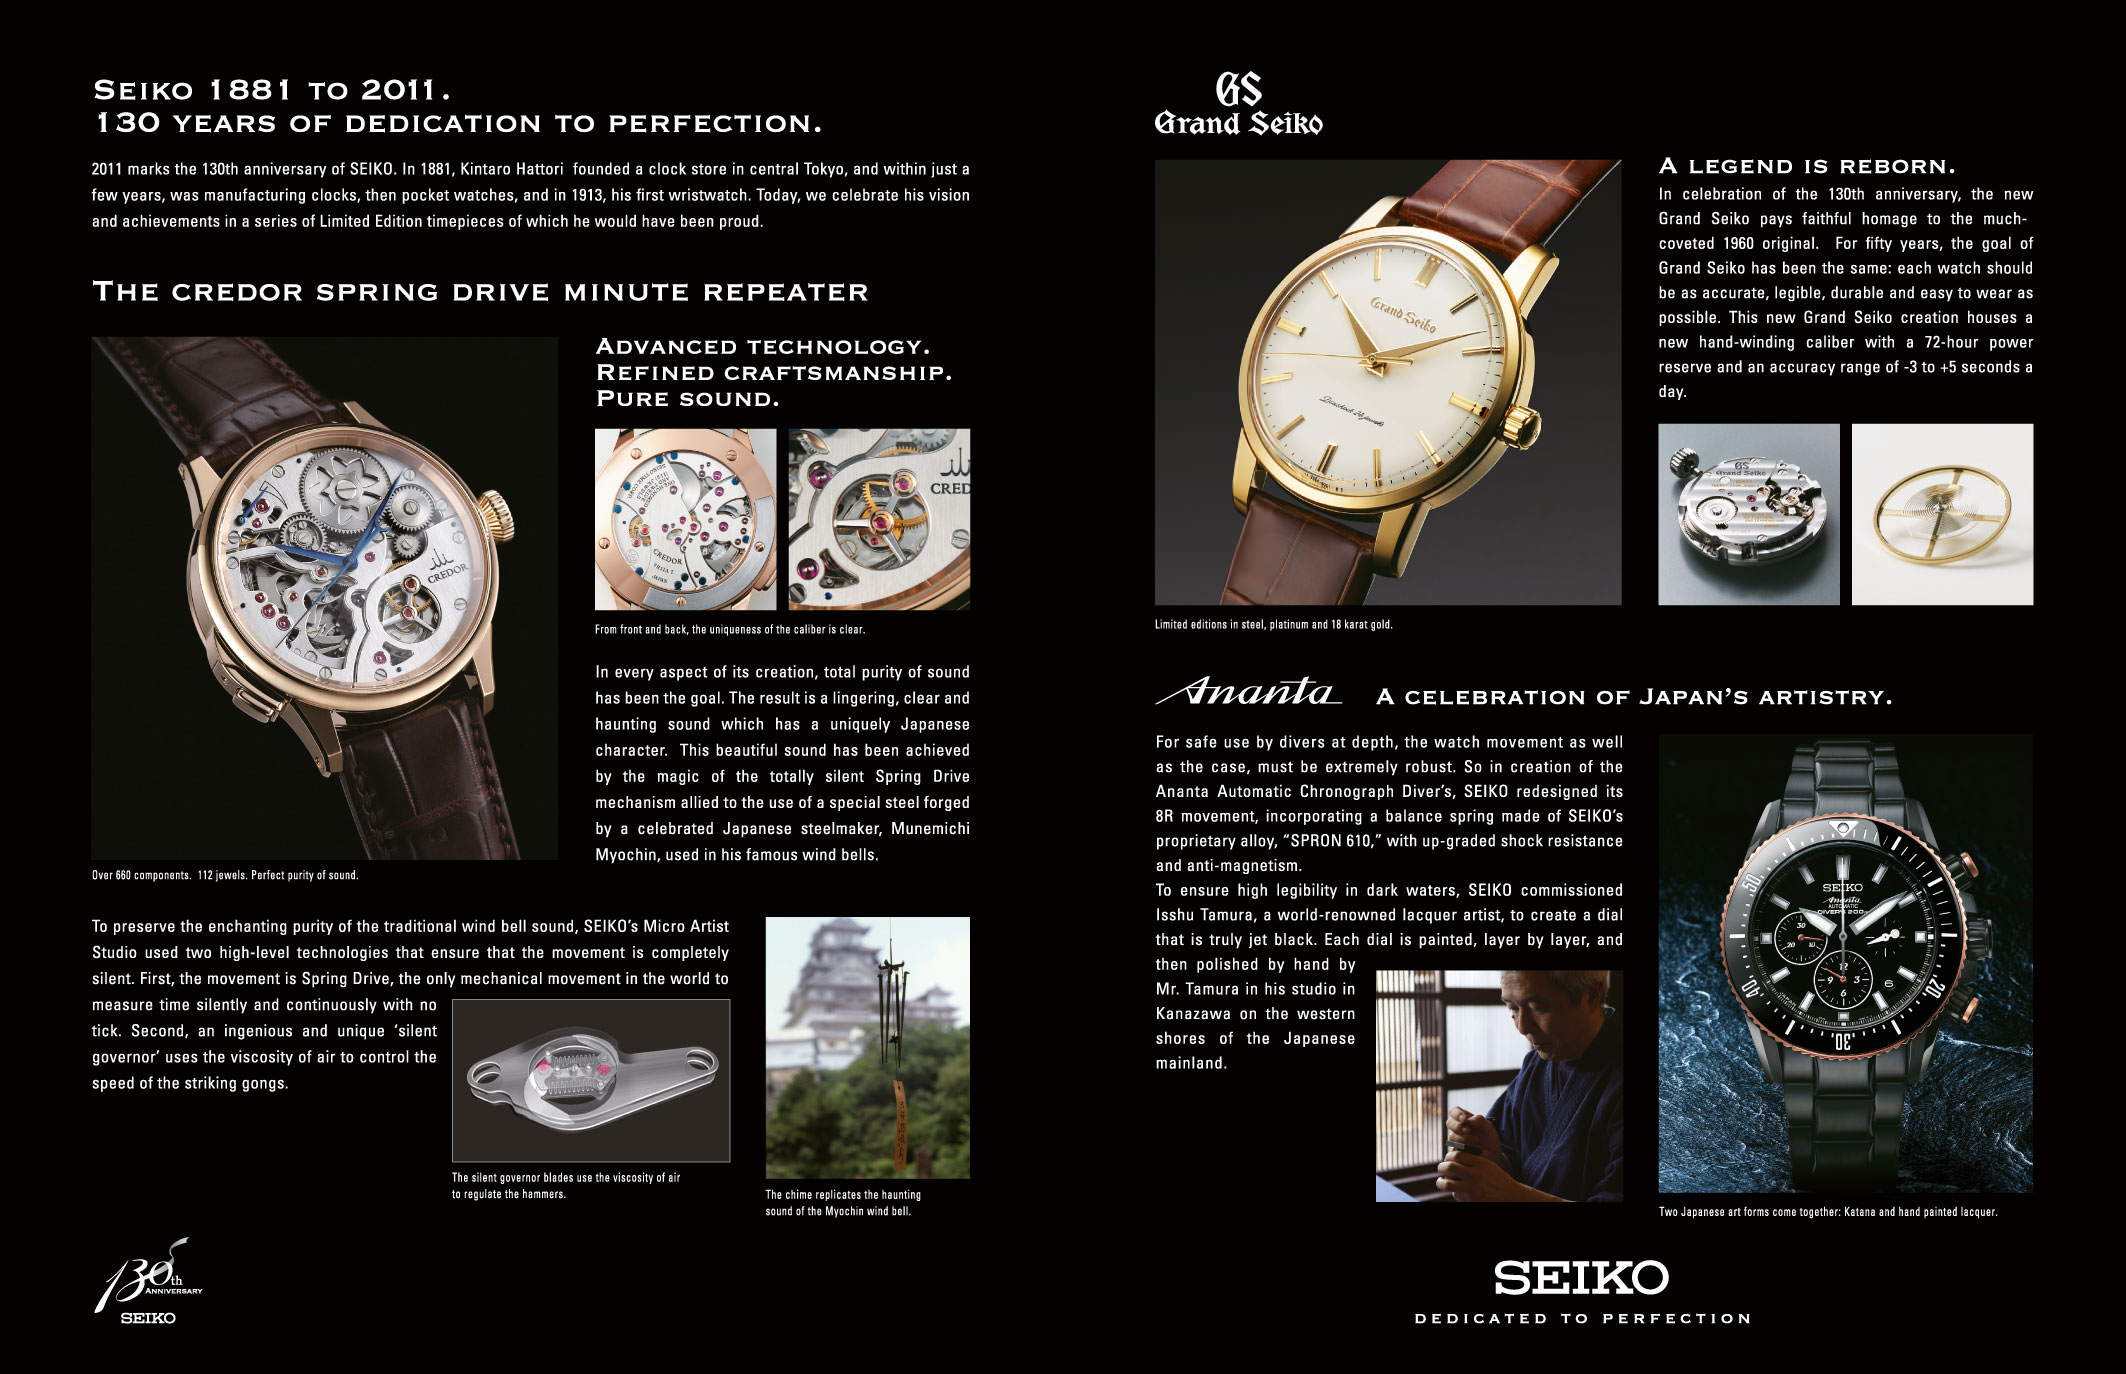 Seiko 1881 – 2011: 130 years of dedication to perfection